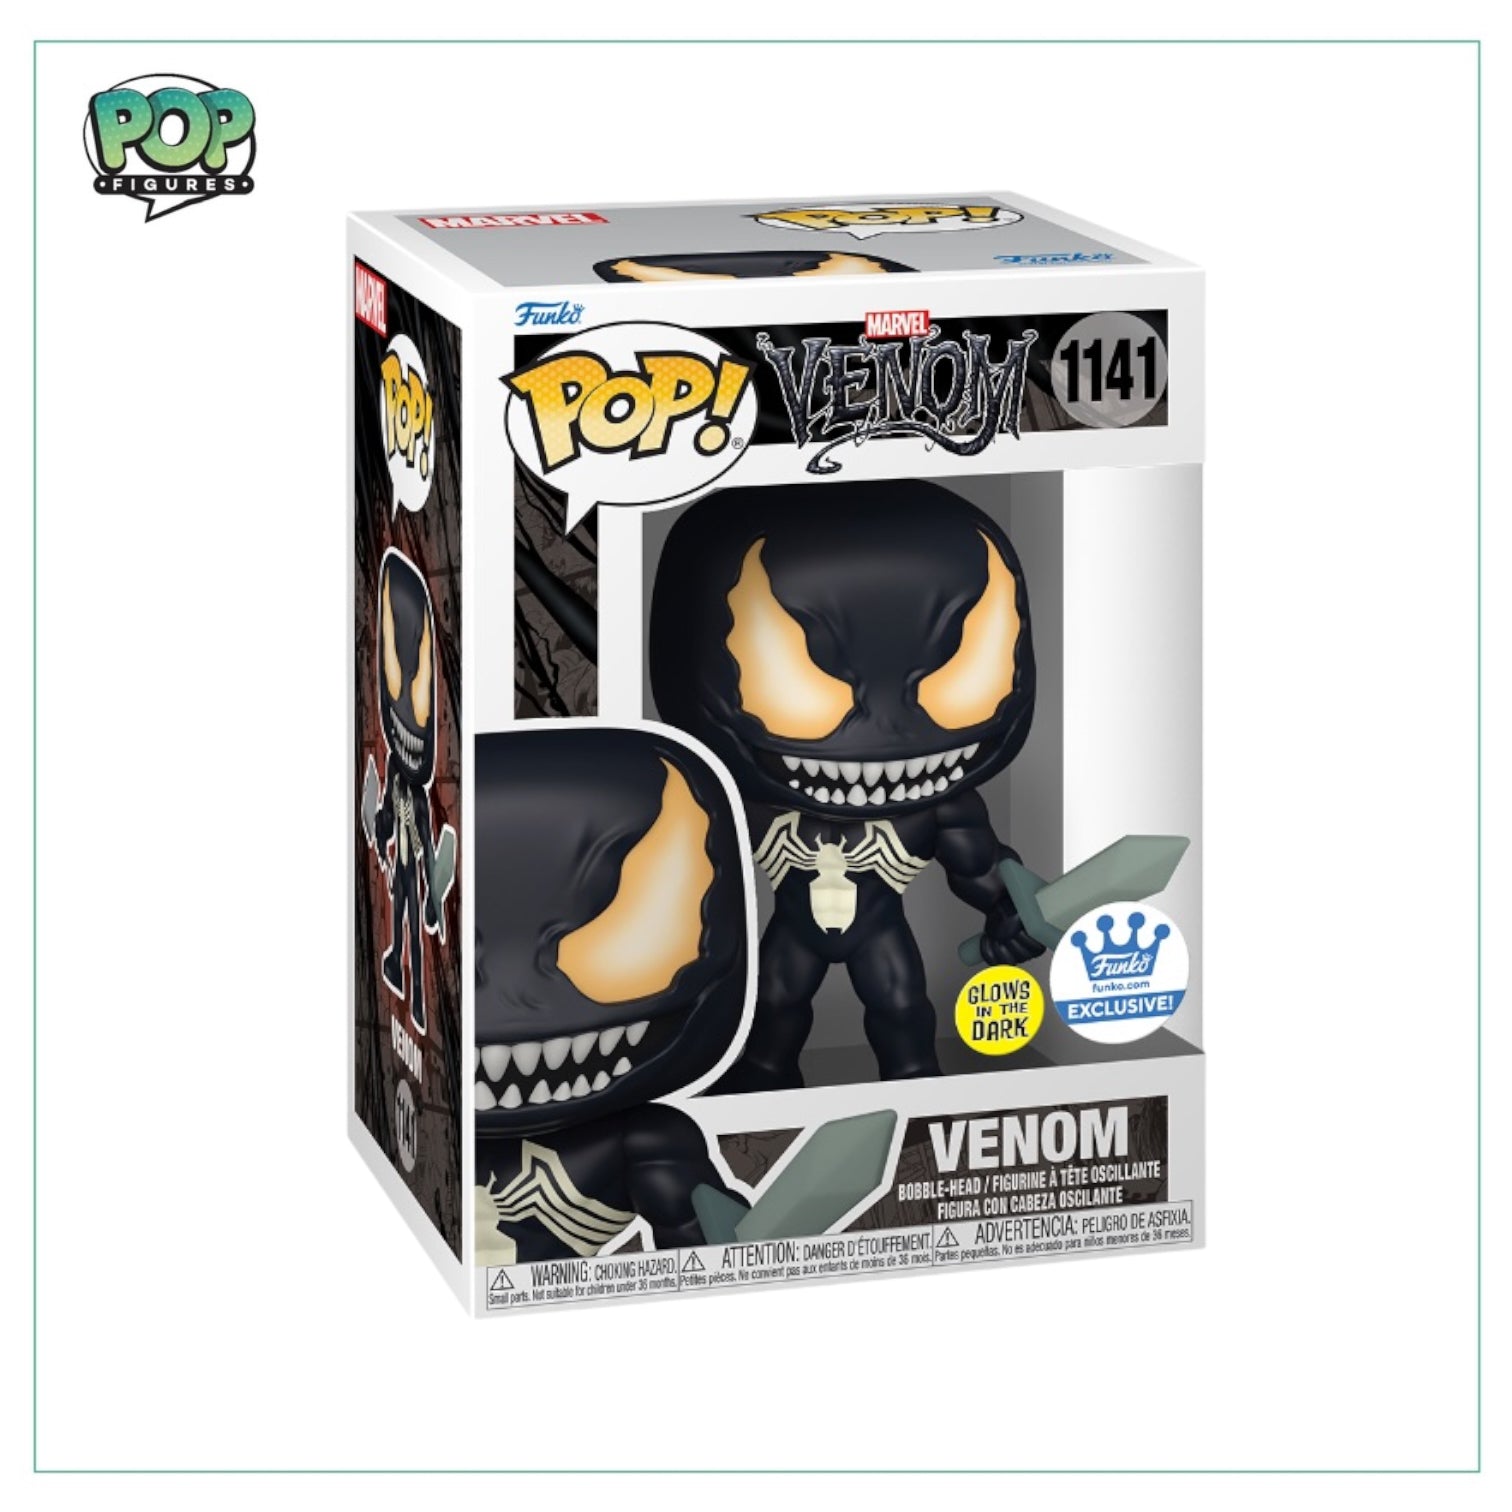 Venom #1141 (w/ Weapons - Glows In The Dark) Funko Pop! - Venom - Funko Shop Exclusive